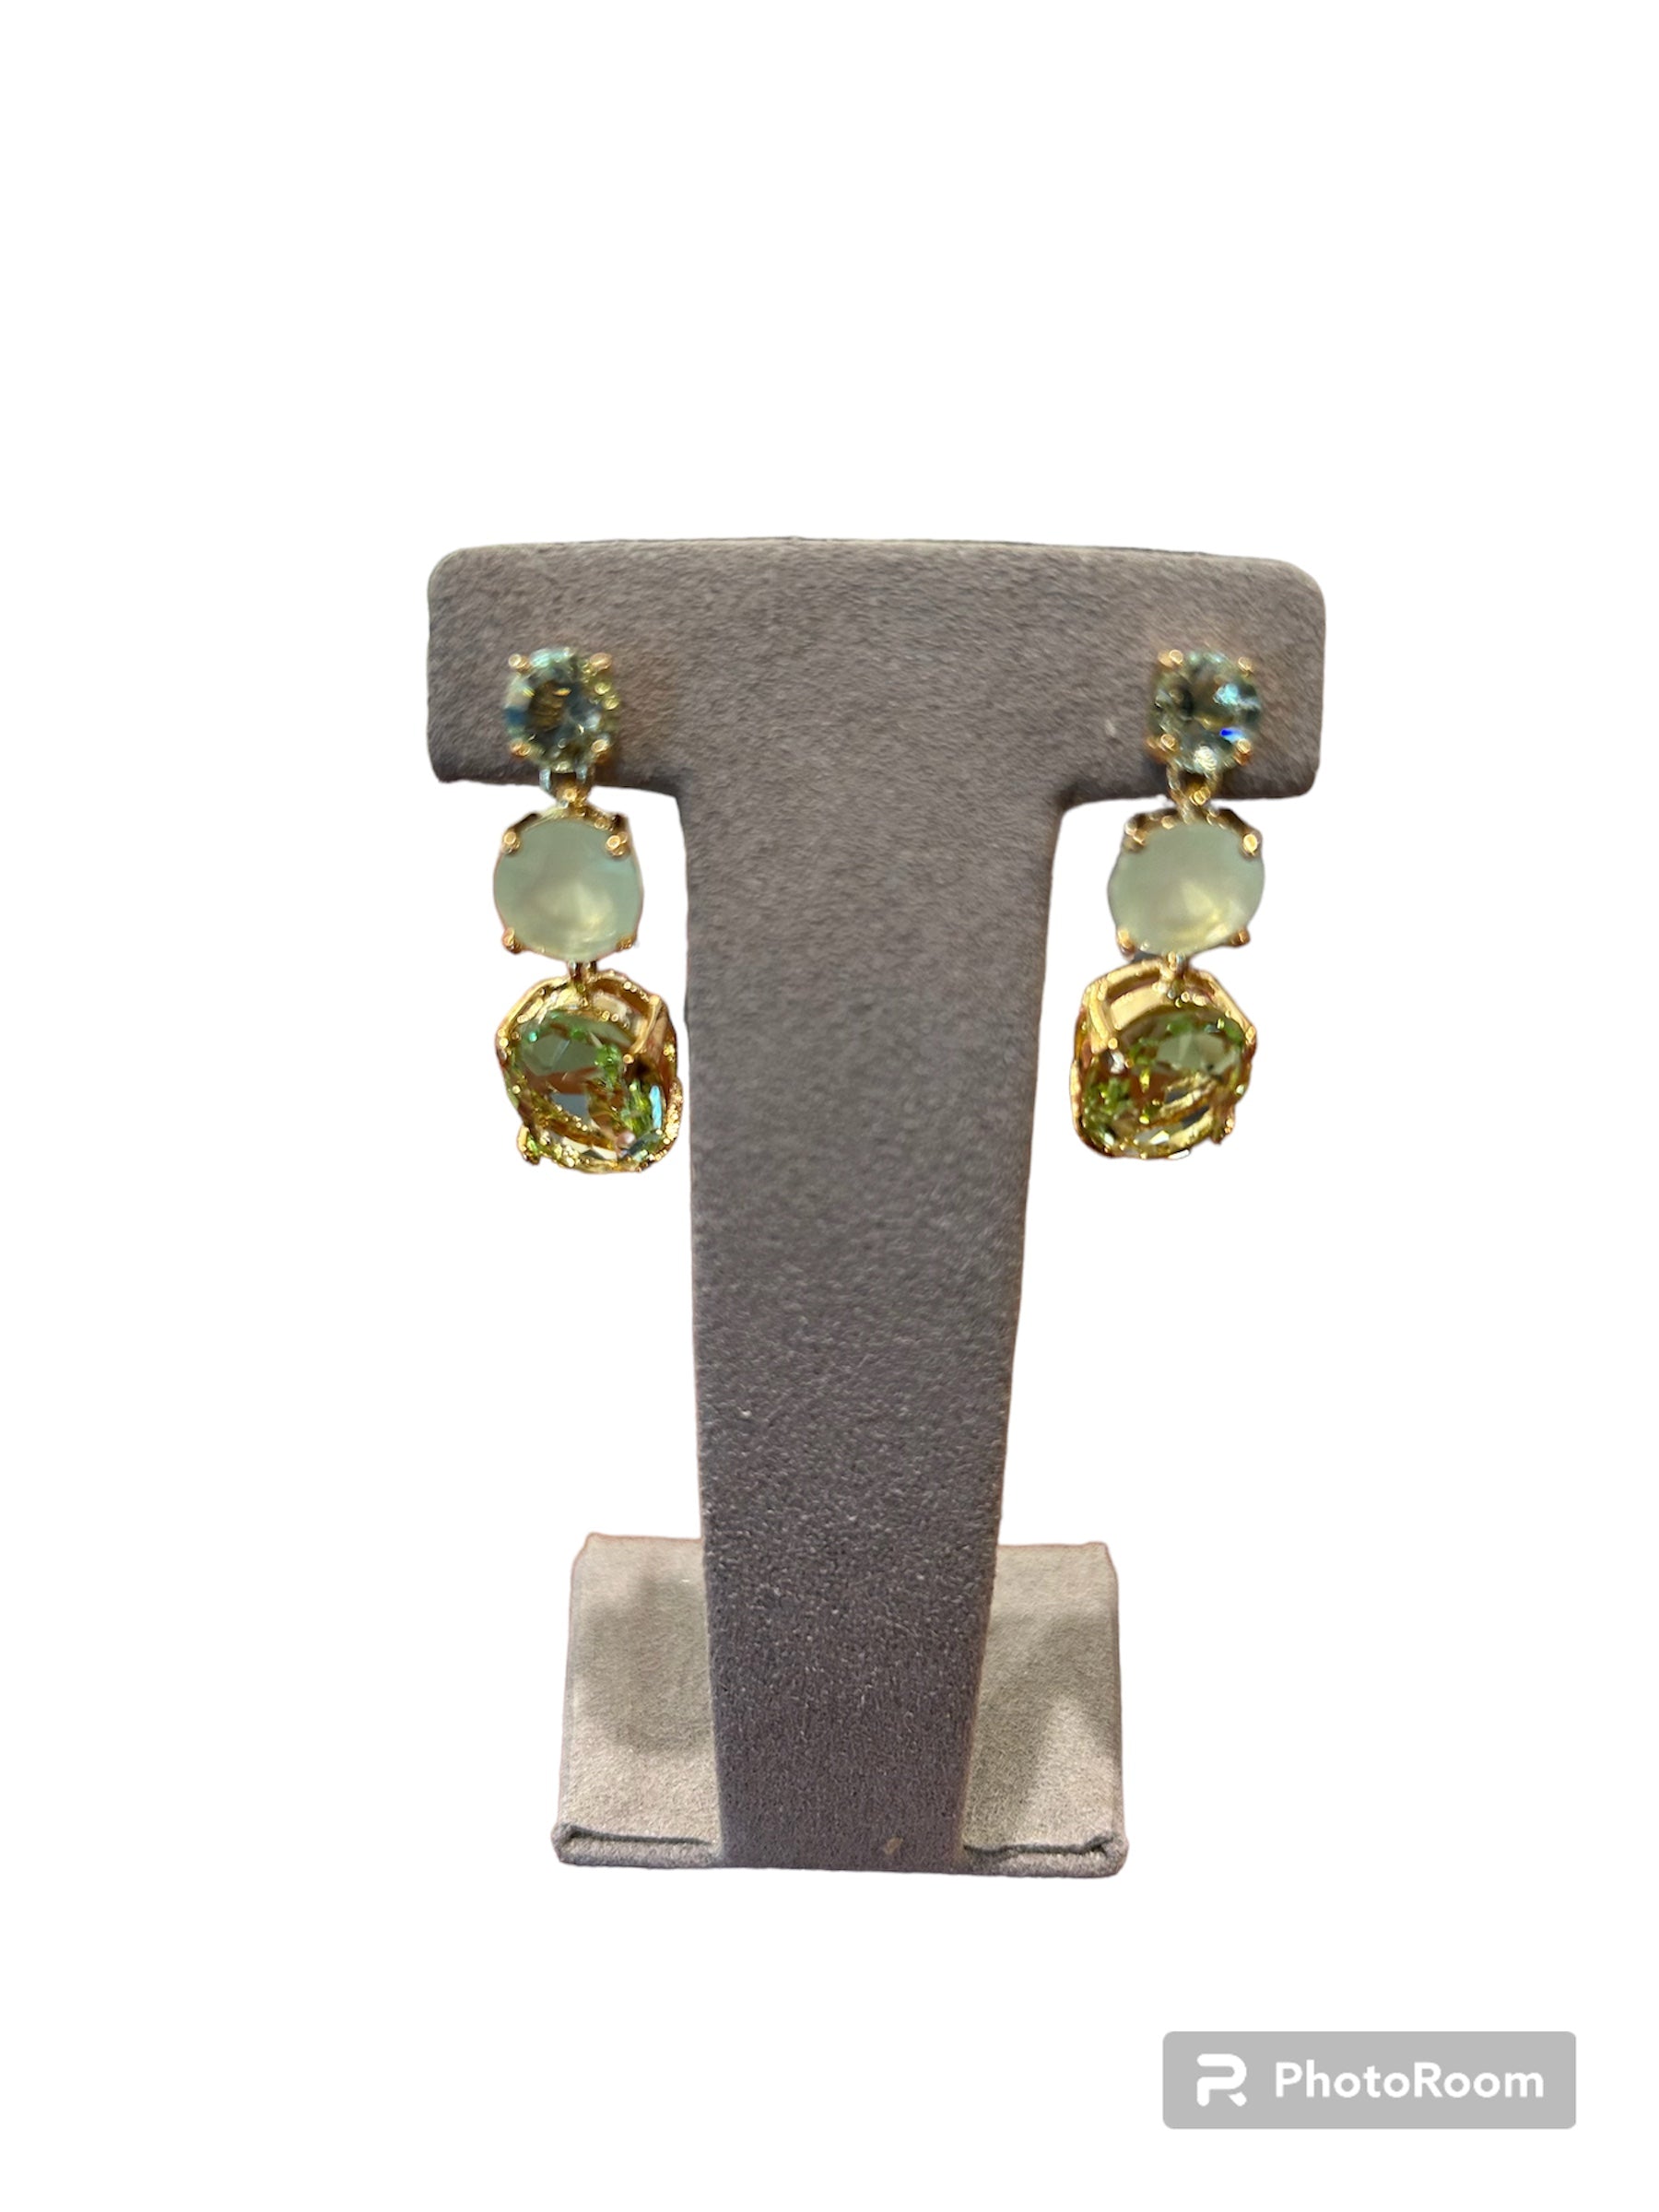 IL Mio Re - Gilt bronze pendant earrings with green stones - ILMIORE OR 062